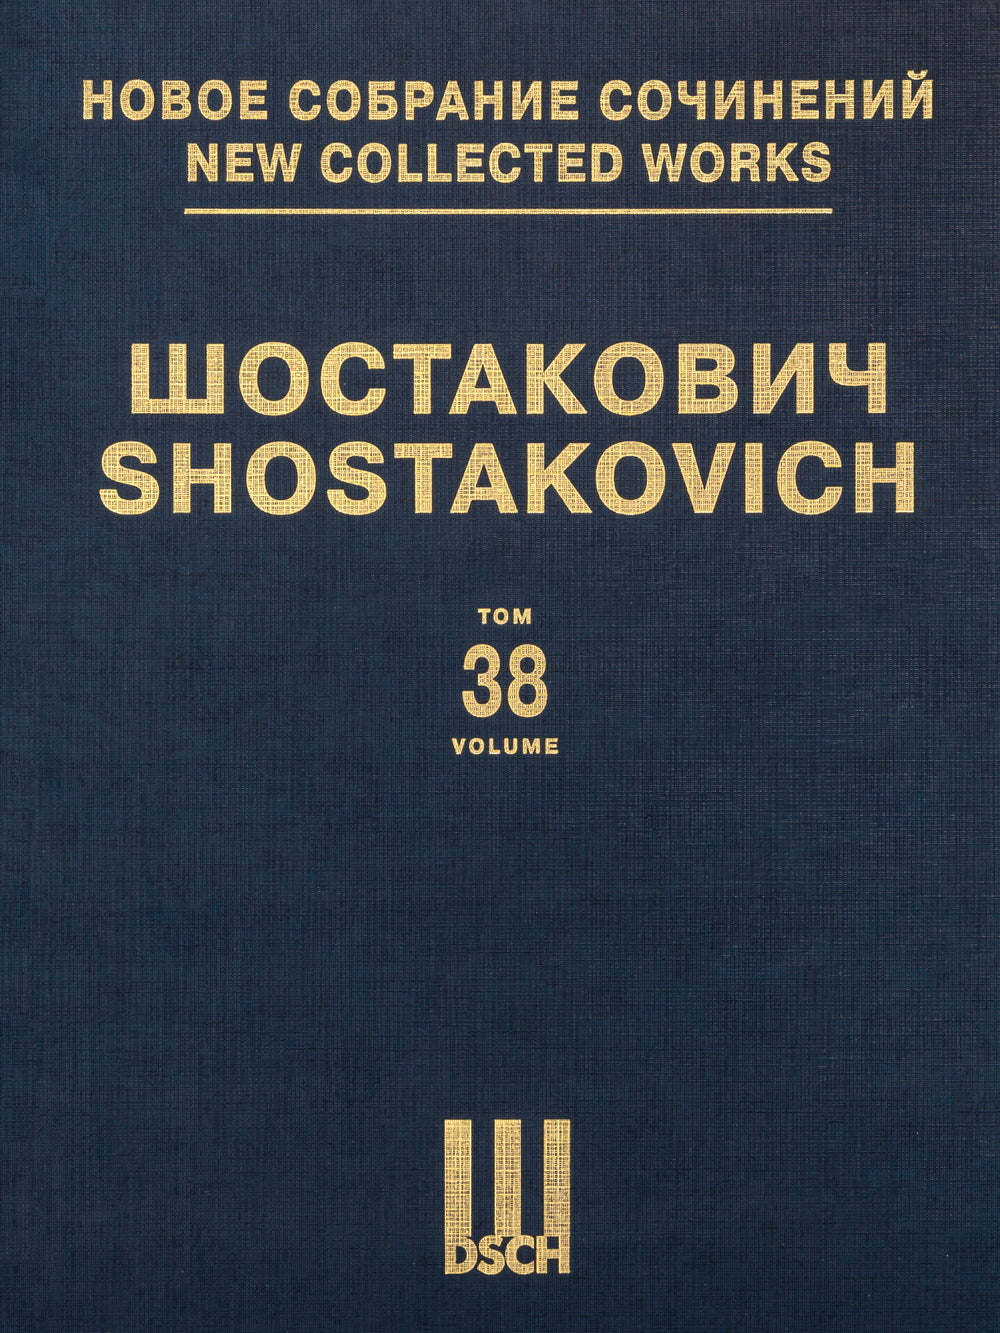 Shostakovich: Piano Concerto No 1, Op. 35